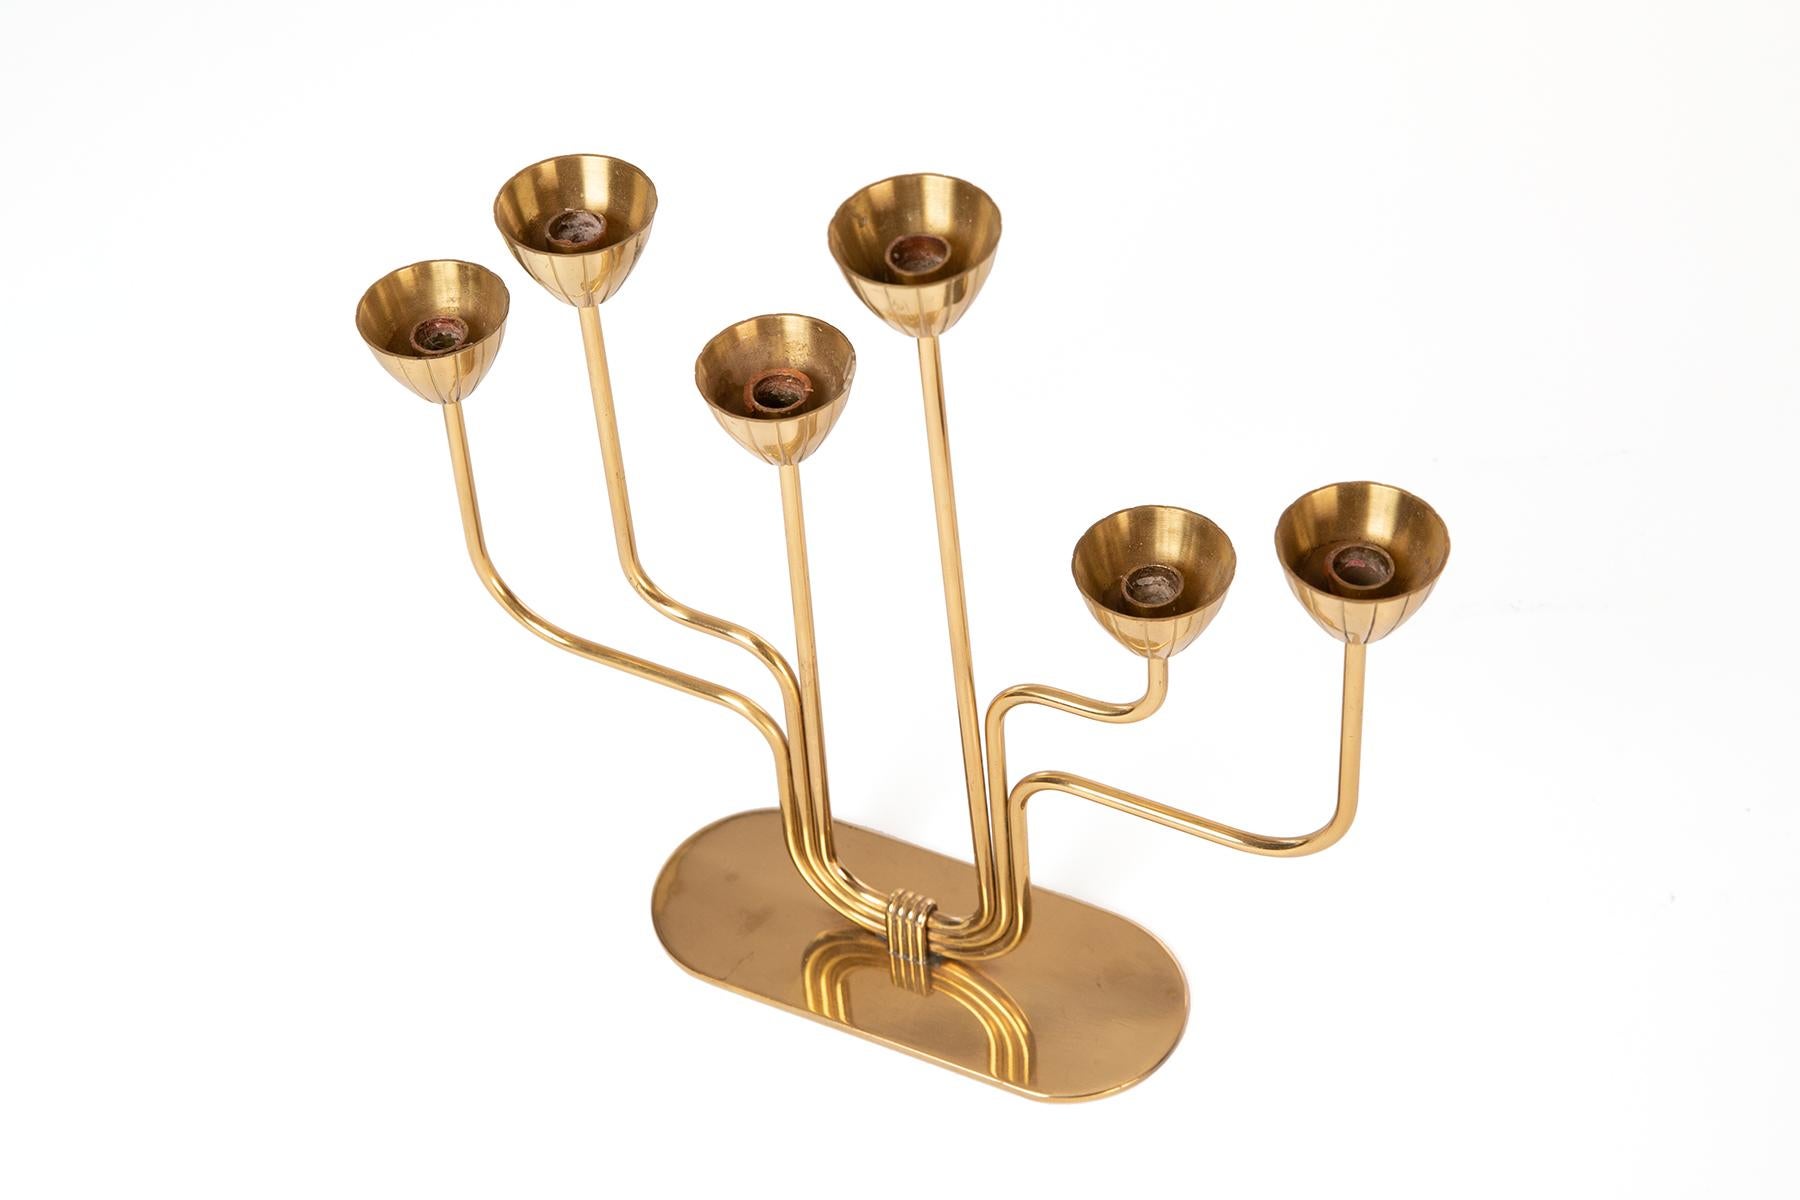 Swedish Gunnar Ander for Ystad Metall Brass Candle Holders Candelabras